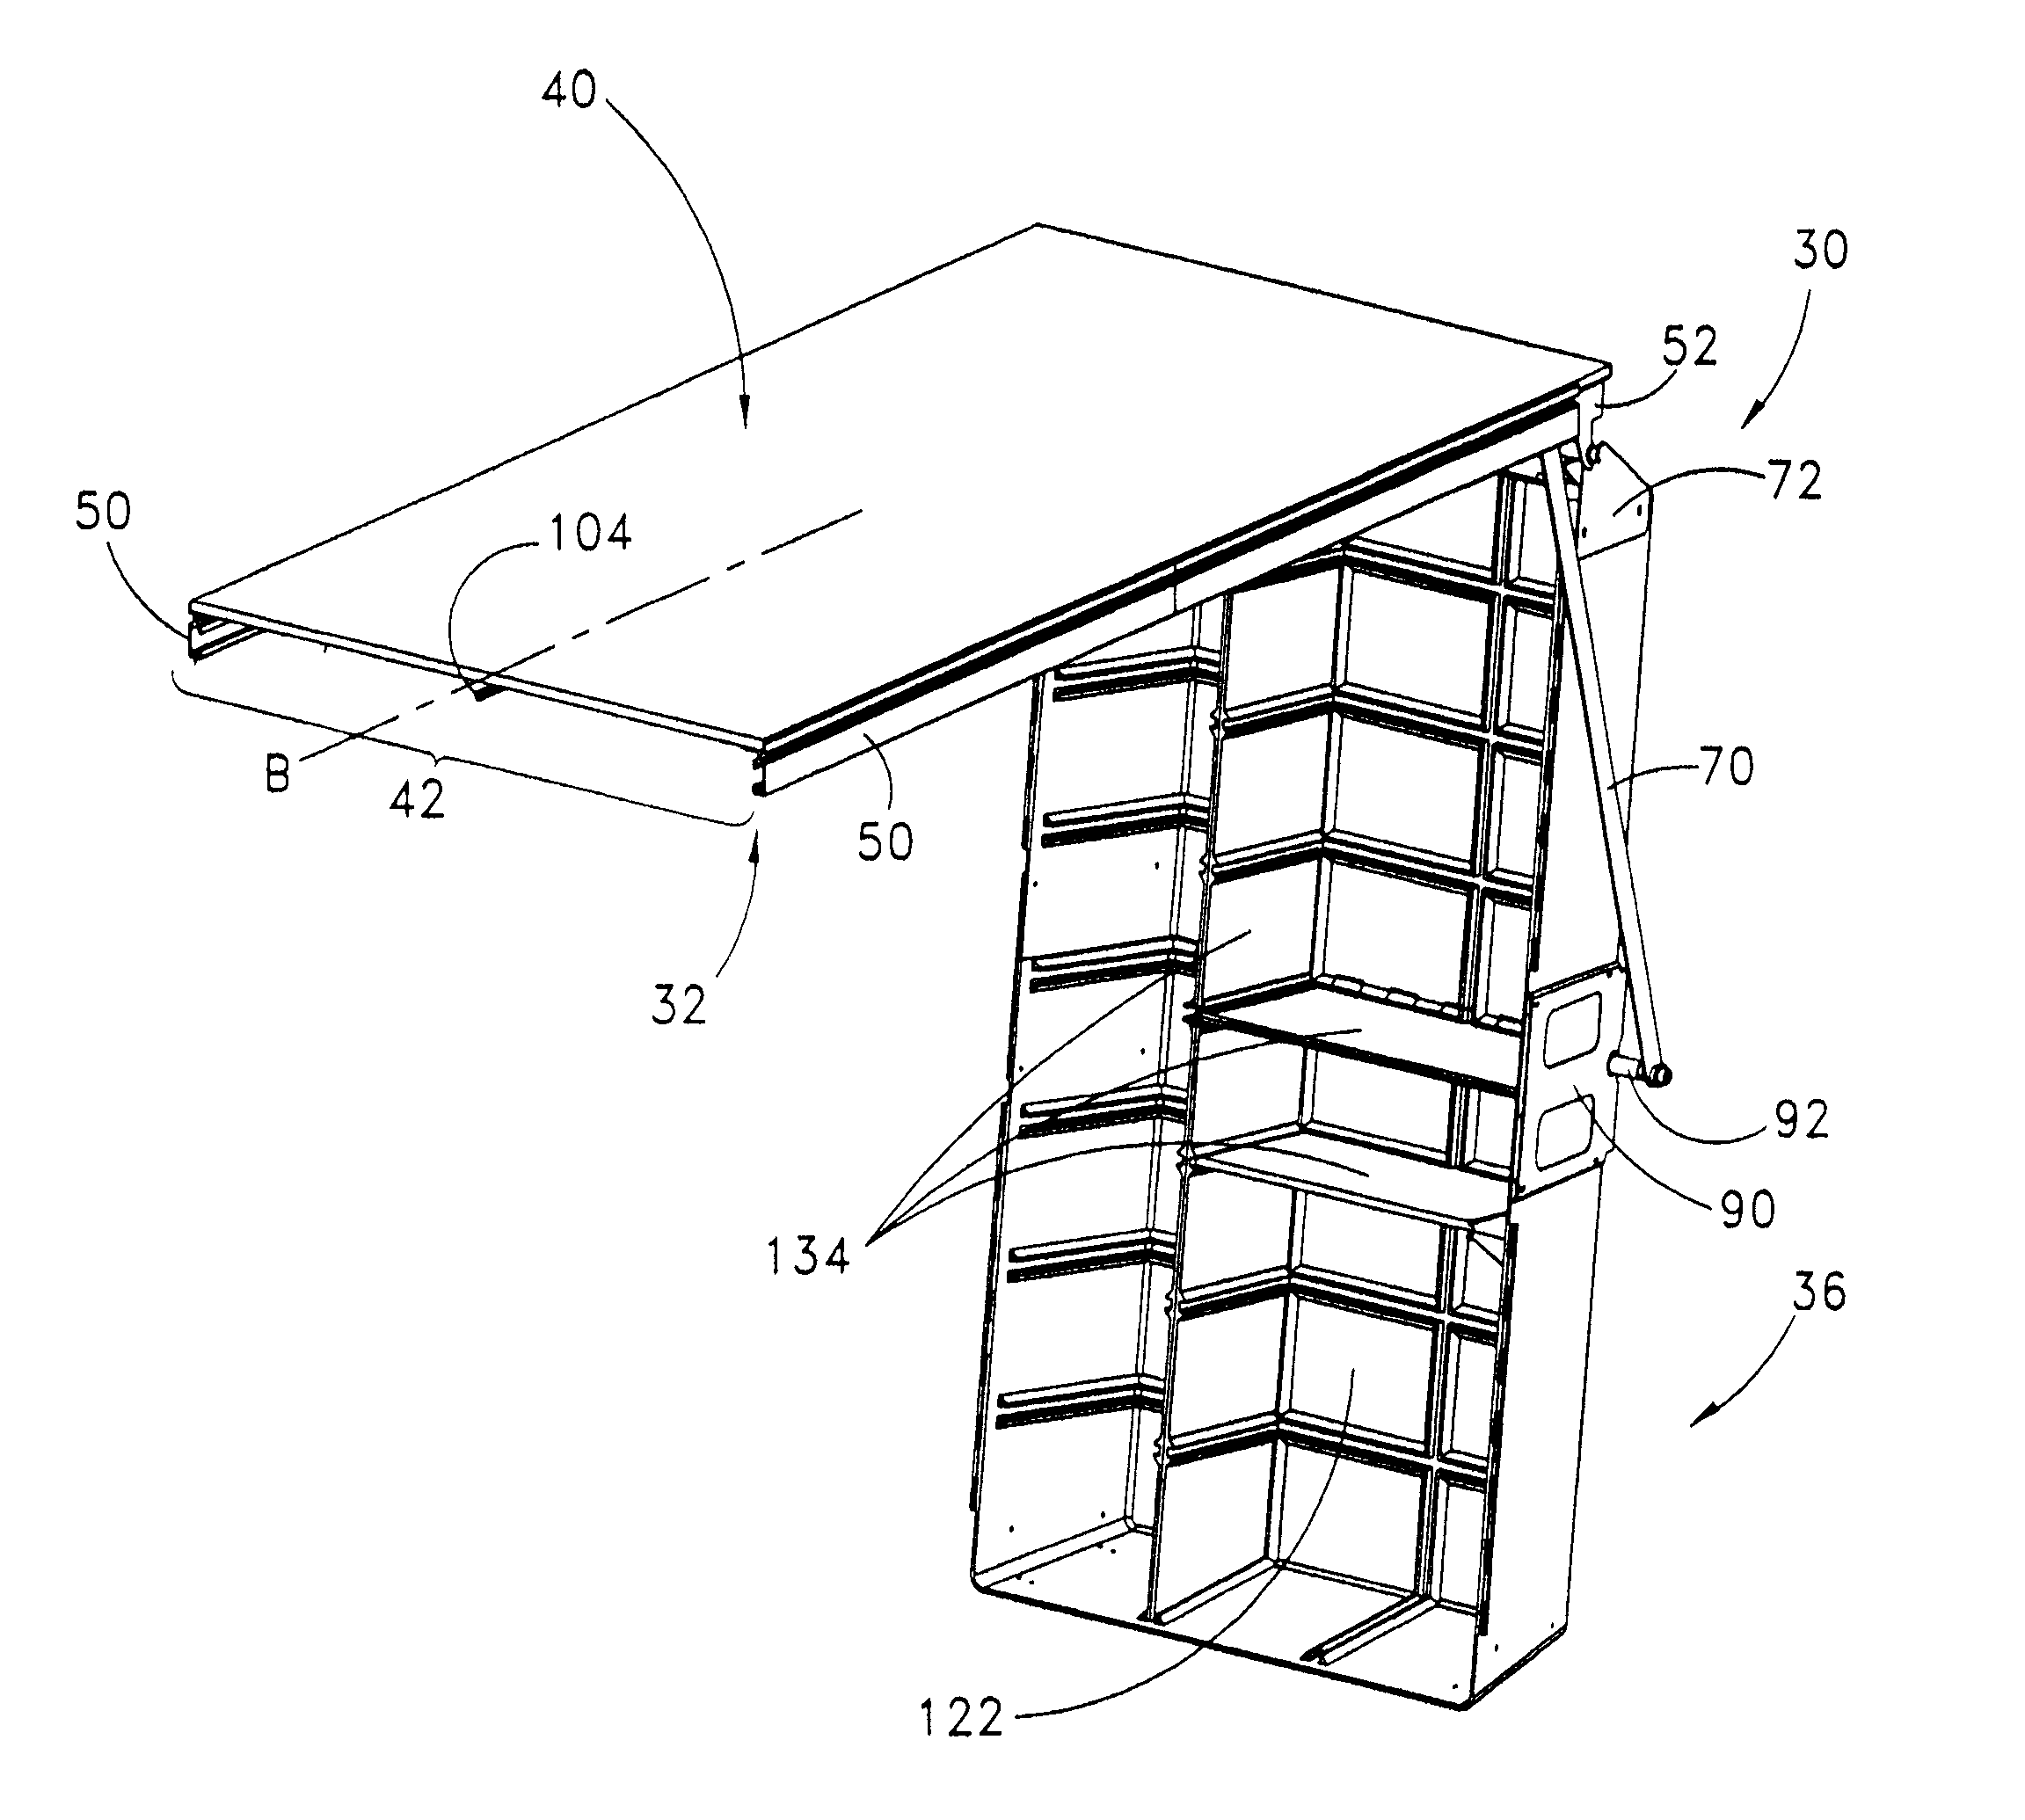 Overhead storage device